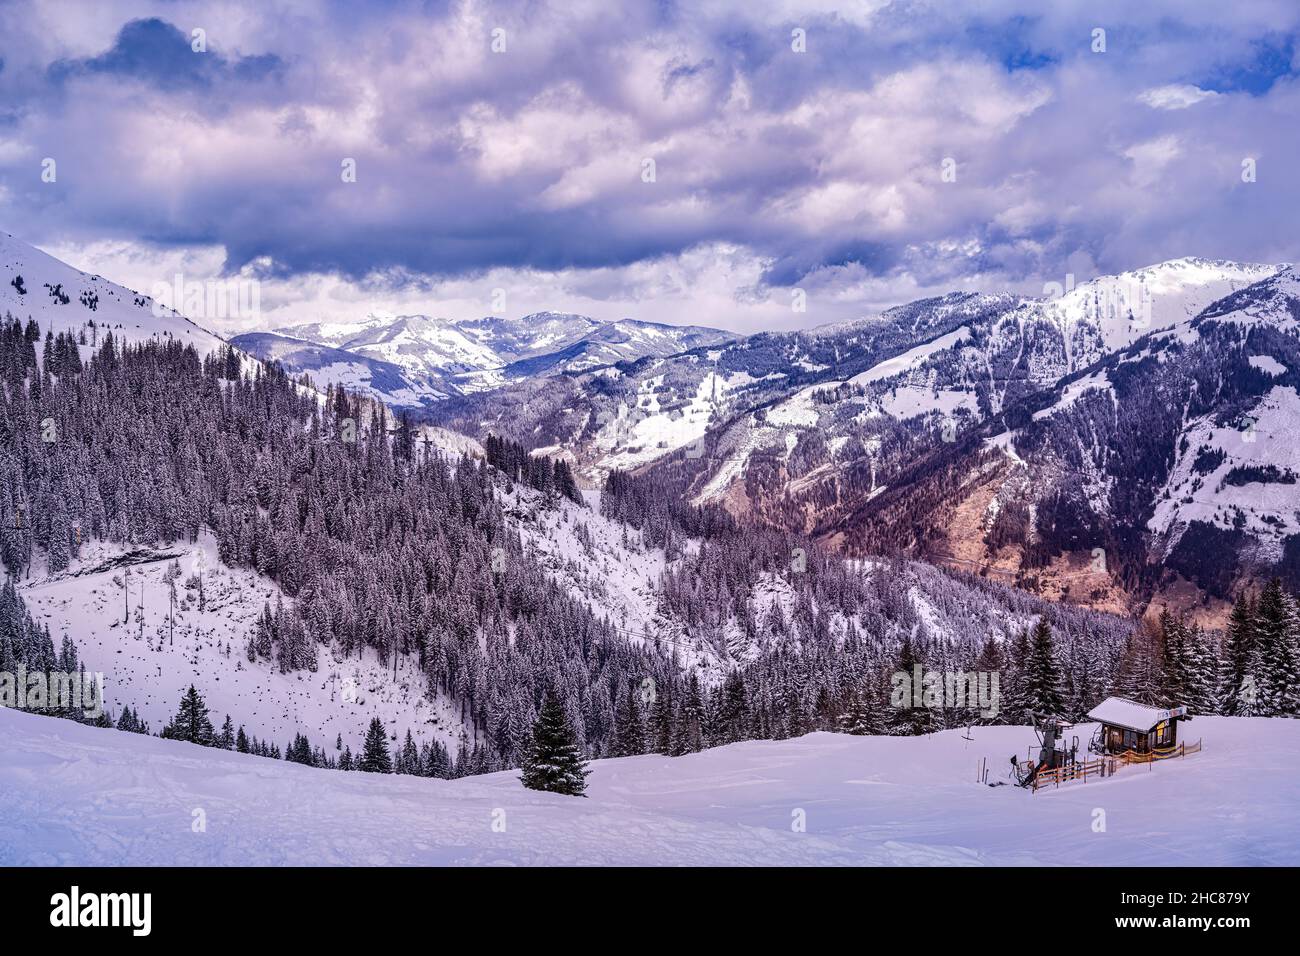 Mountains in Alps with falling snow, Rauris ski resort, Austria Stock Photo